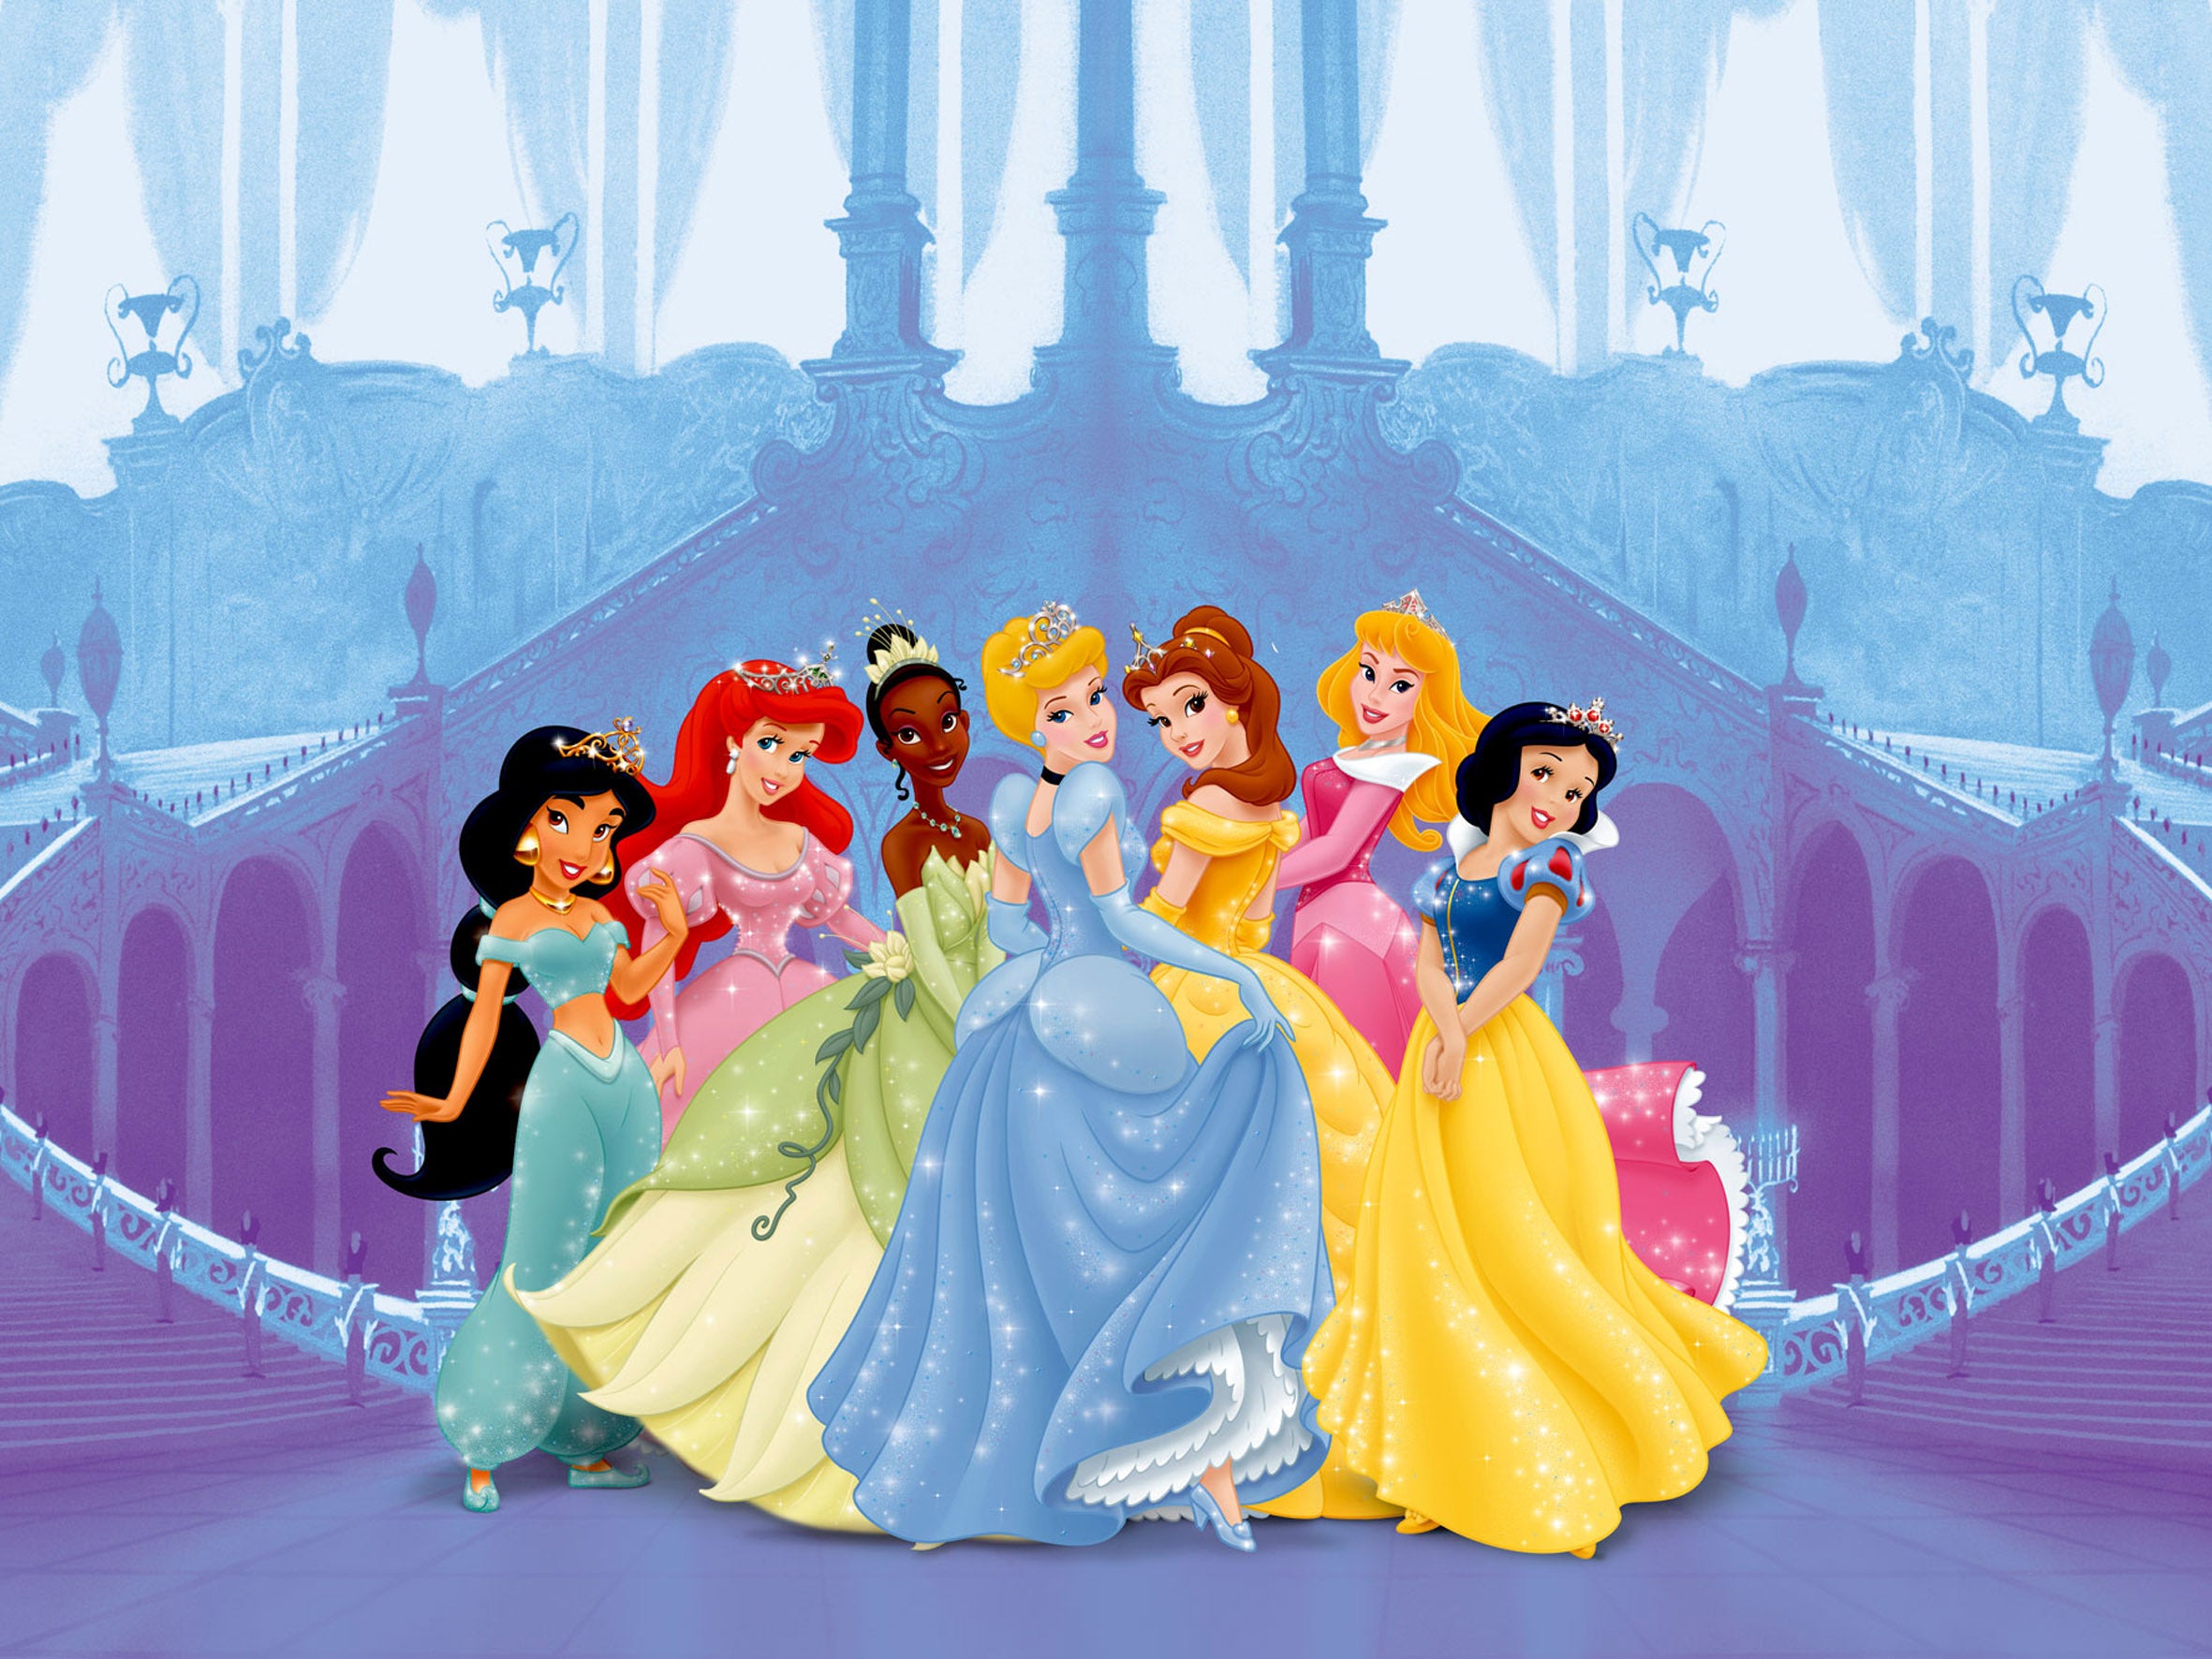 Princesses bleu, rose et violet - 360 x 254 cm - Disney